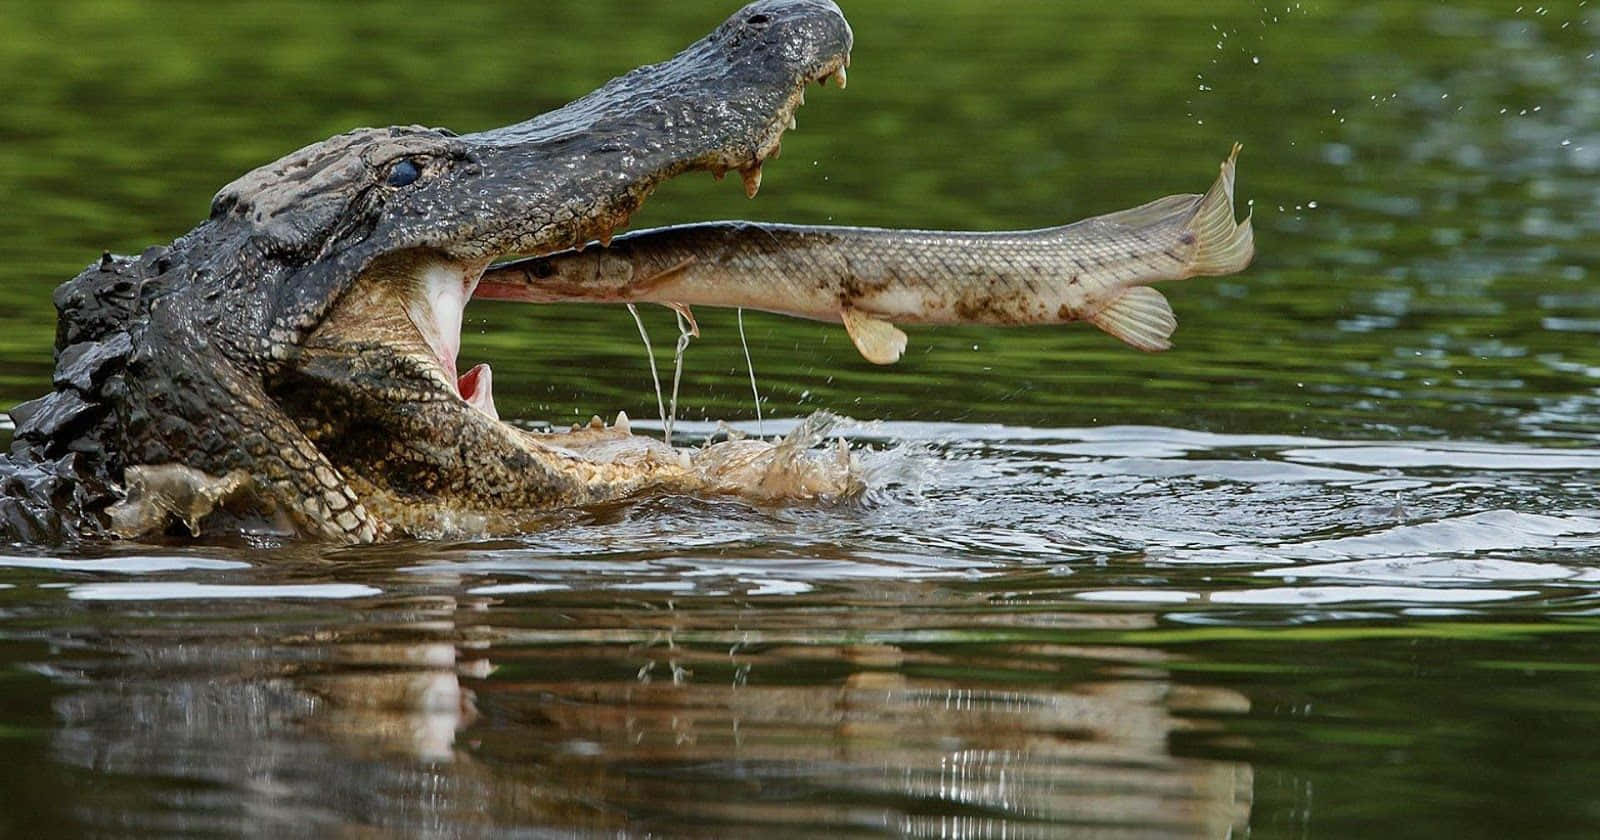 Crocodile Wild Eating Fish Picture